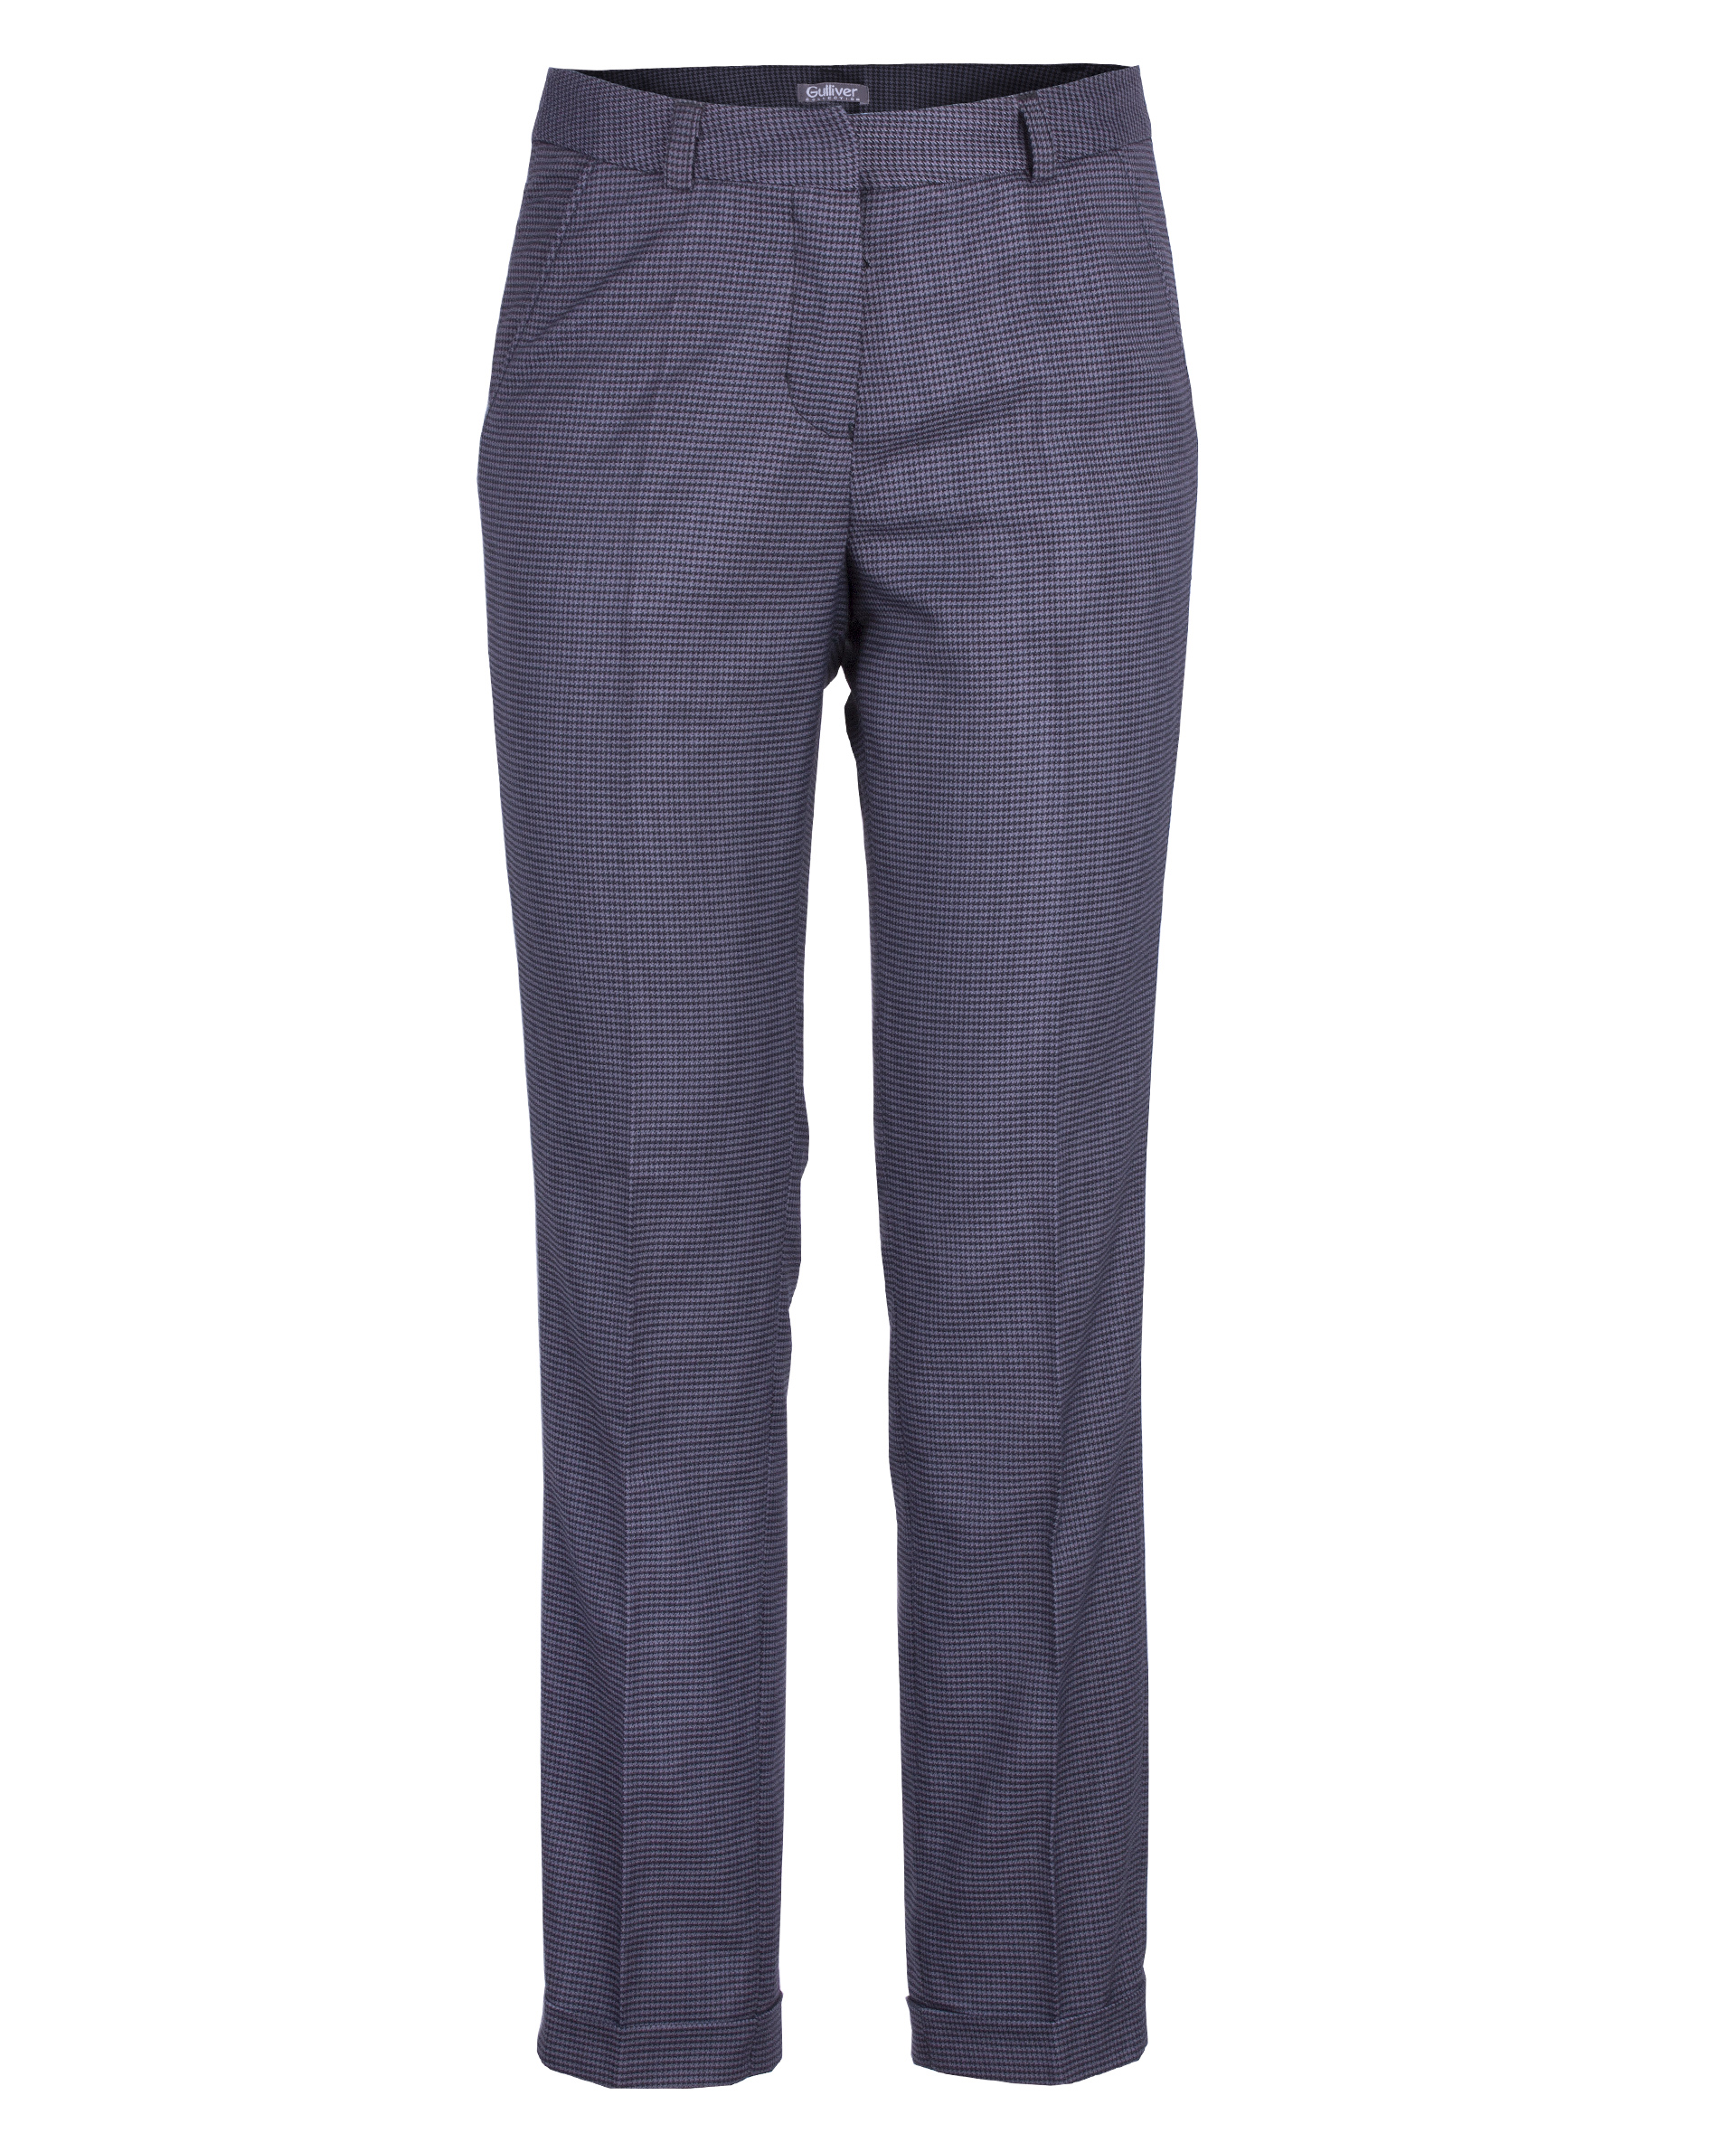 Серые брюки Gulliver 218GSGC6307, размер 170, цвет серый - фото 1